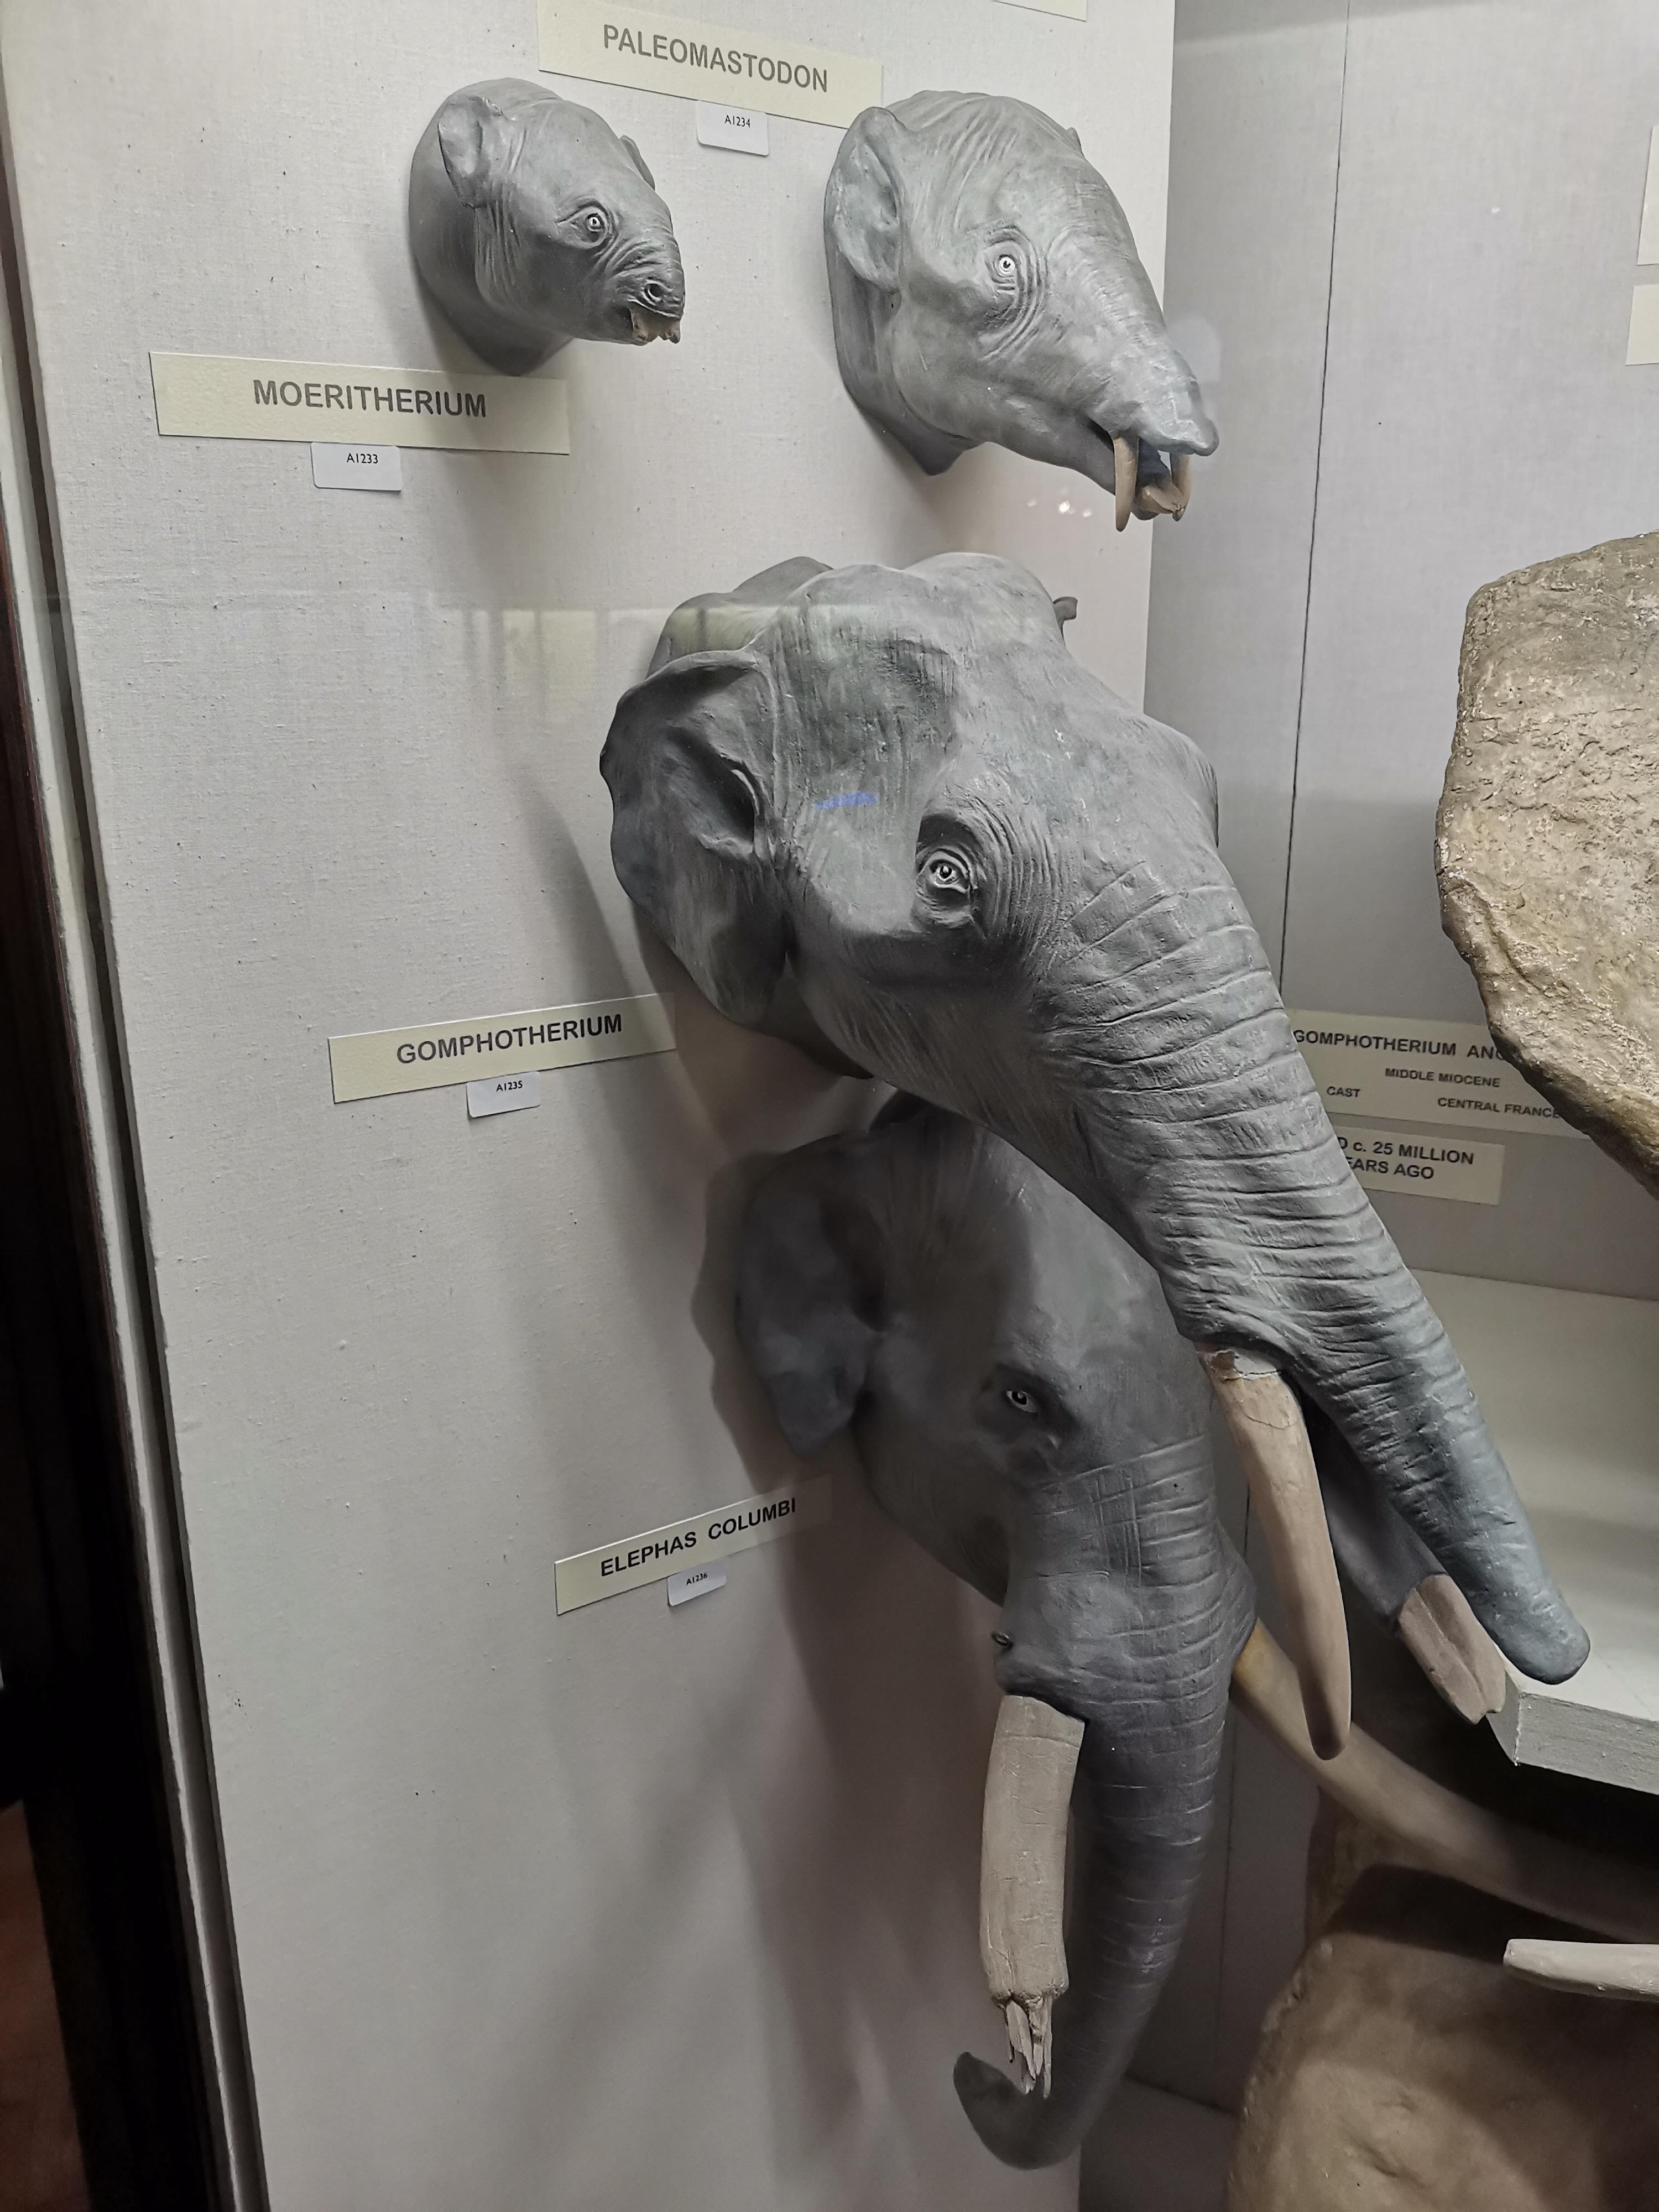 The evolution the elephant.